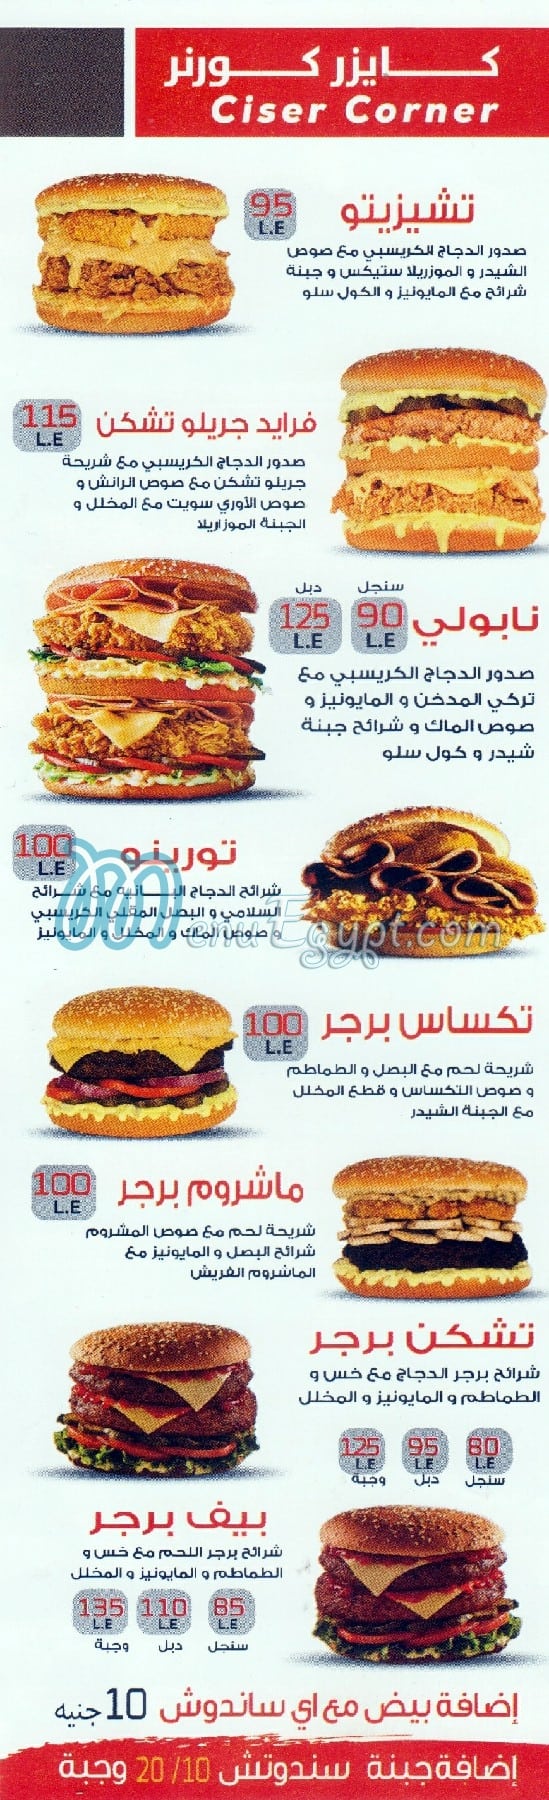 Rosto El Sheikh Zayed delivery menu